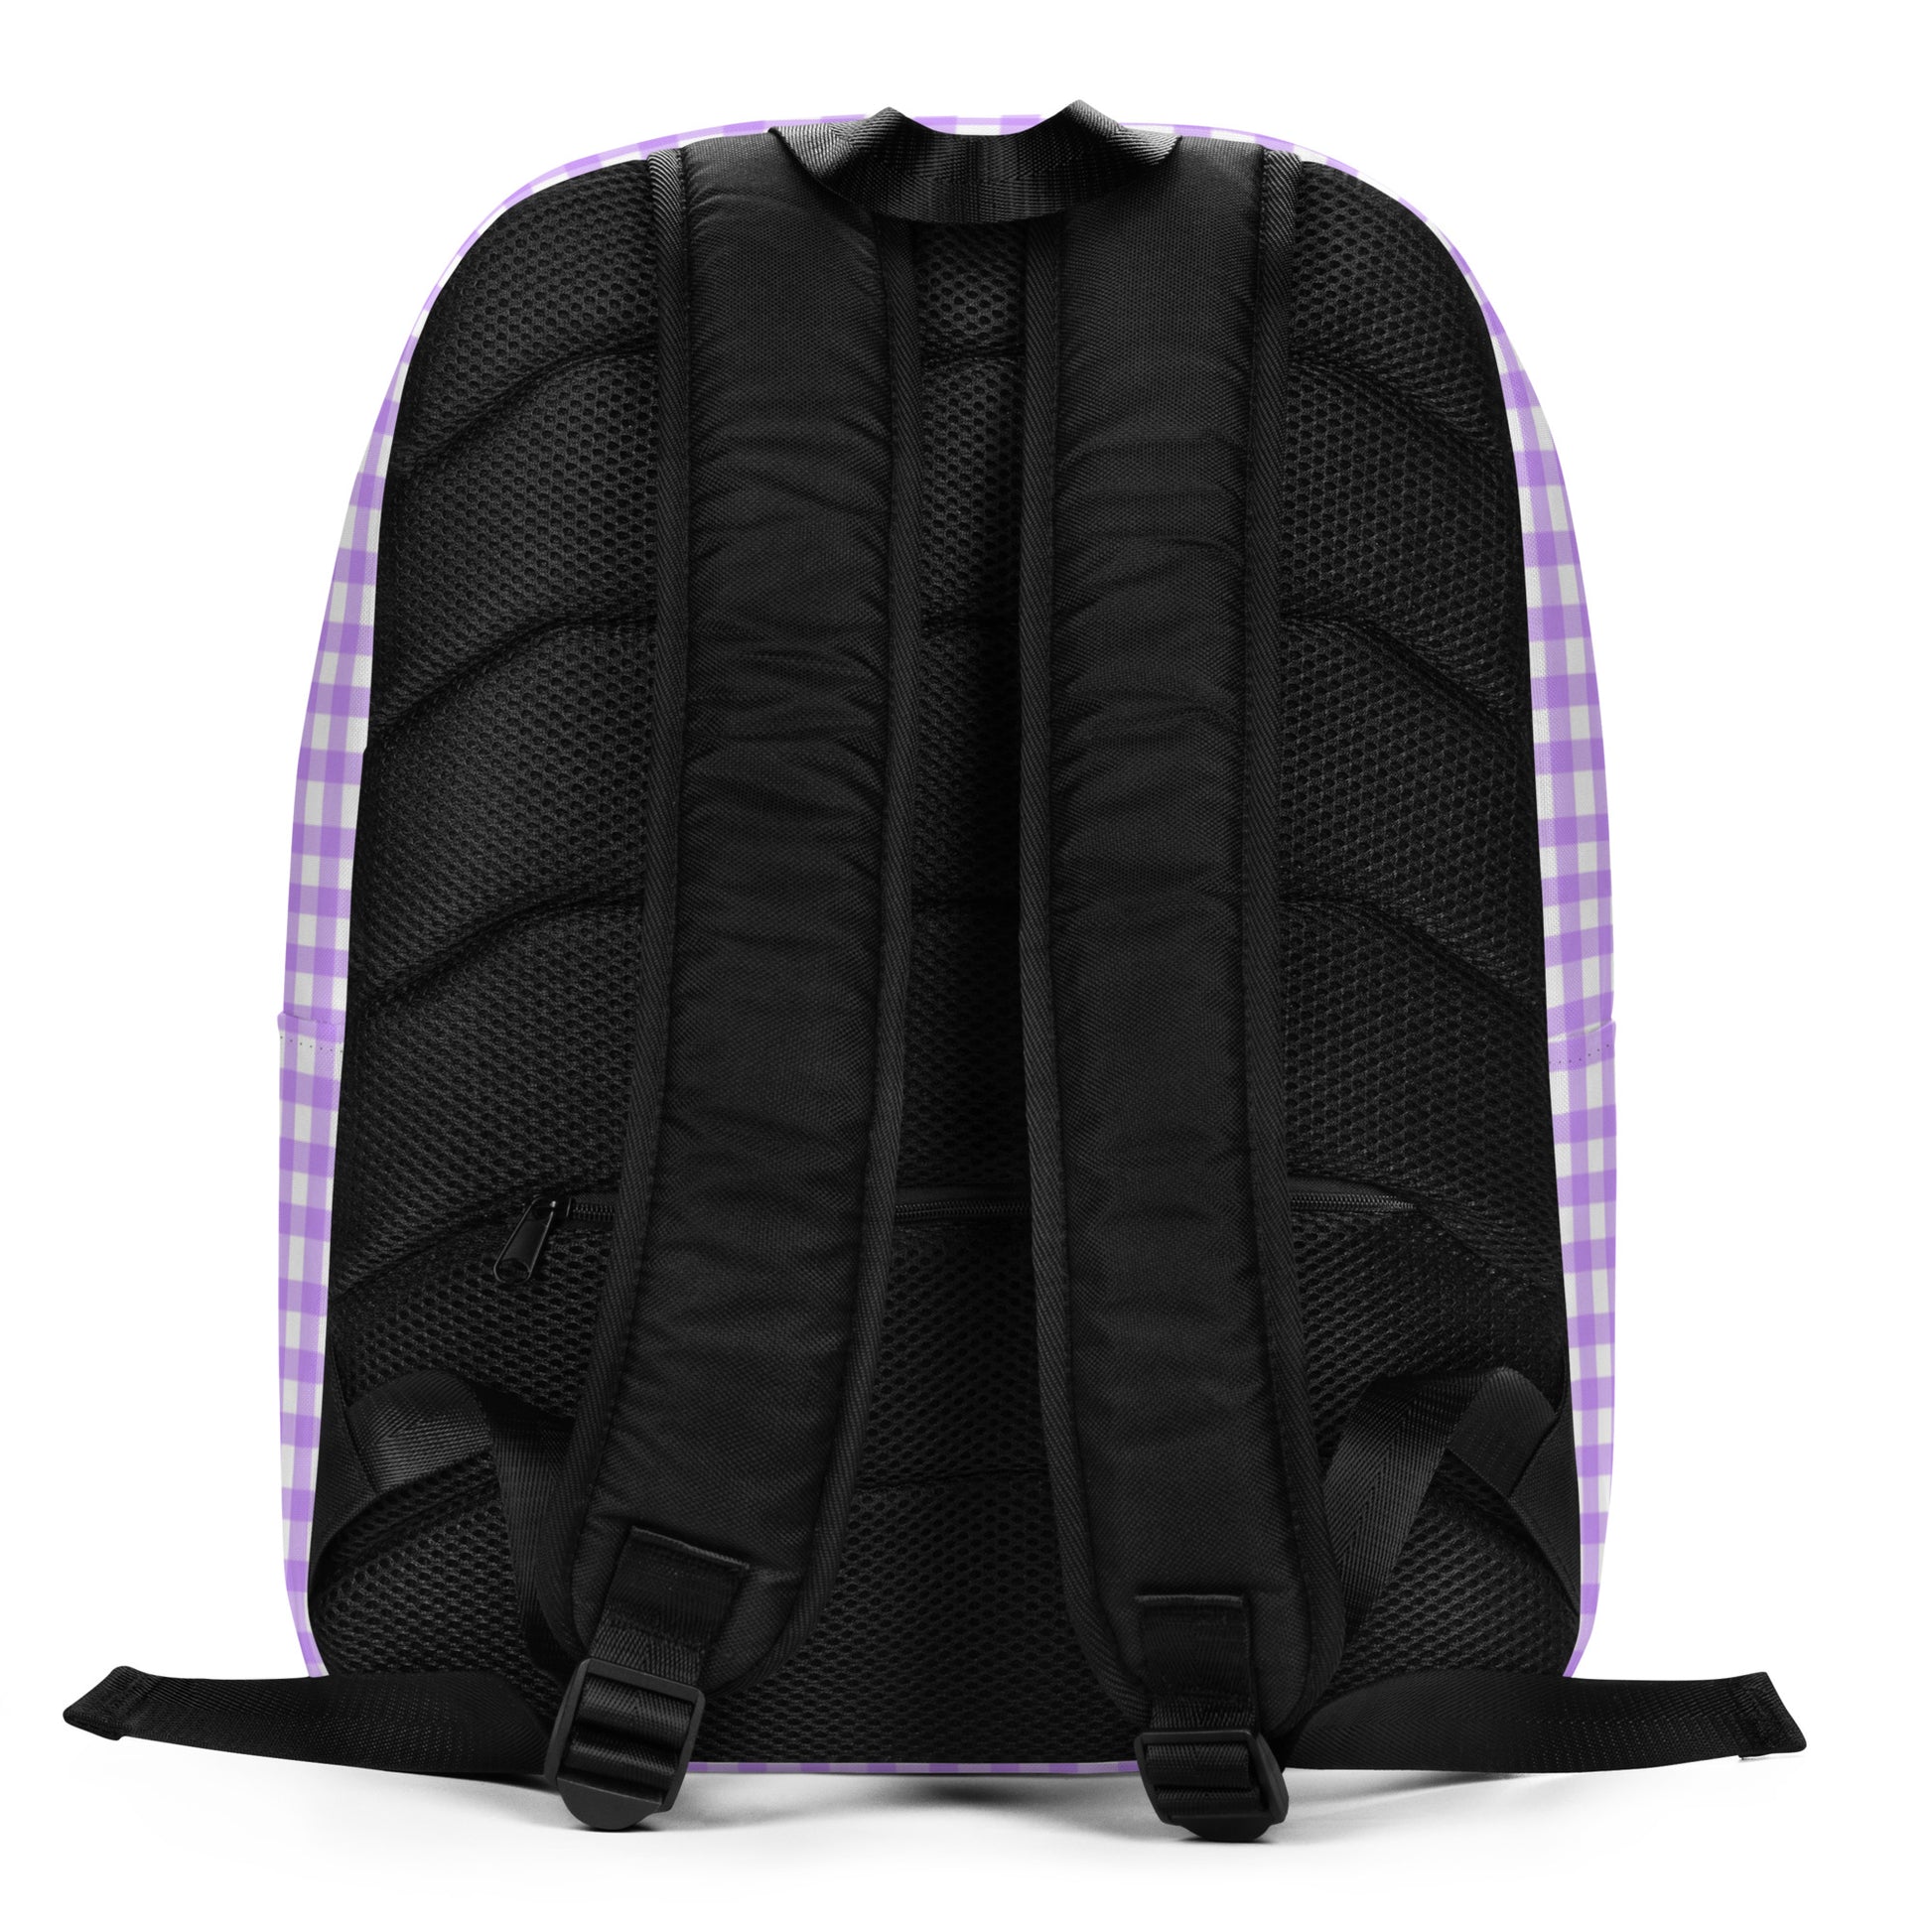 Flamenco Dancer Customizable Backpack, purple dress on a purple gingham check design. - IllustrArte